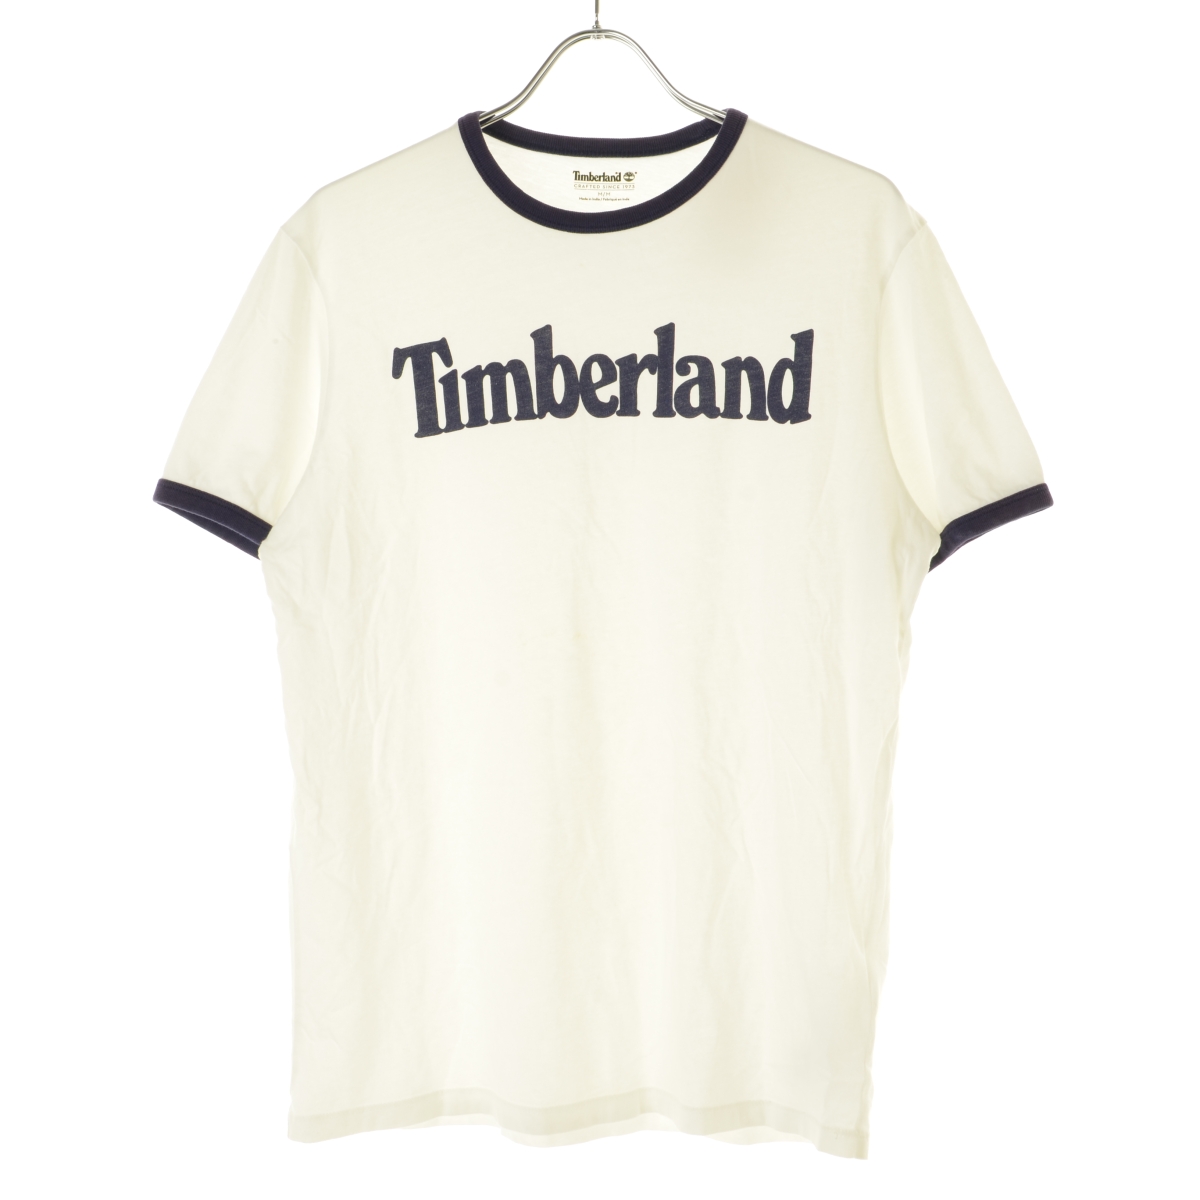 TIMBERLAND / ティンバーランド ロゴプリントリンガー 半袖Tシャツ -ブランド古着の買取販売カンフル